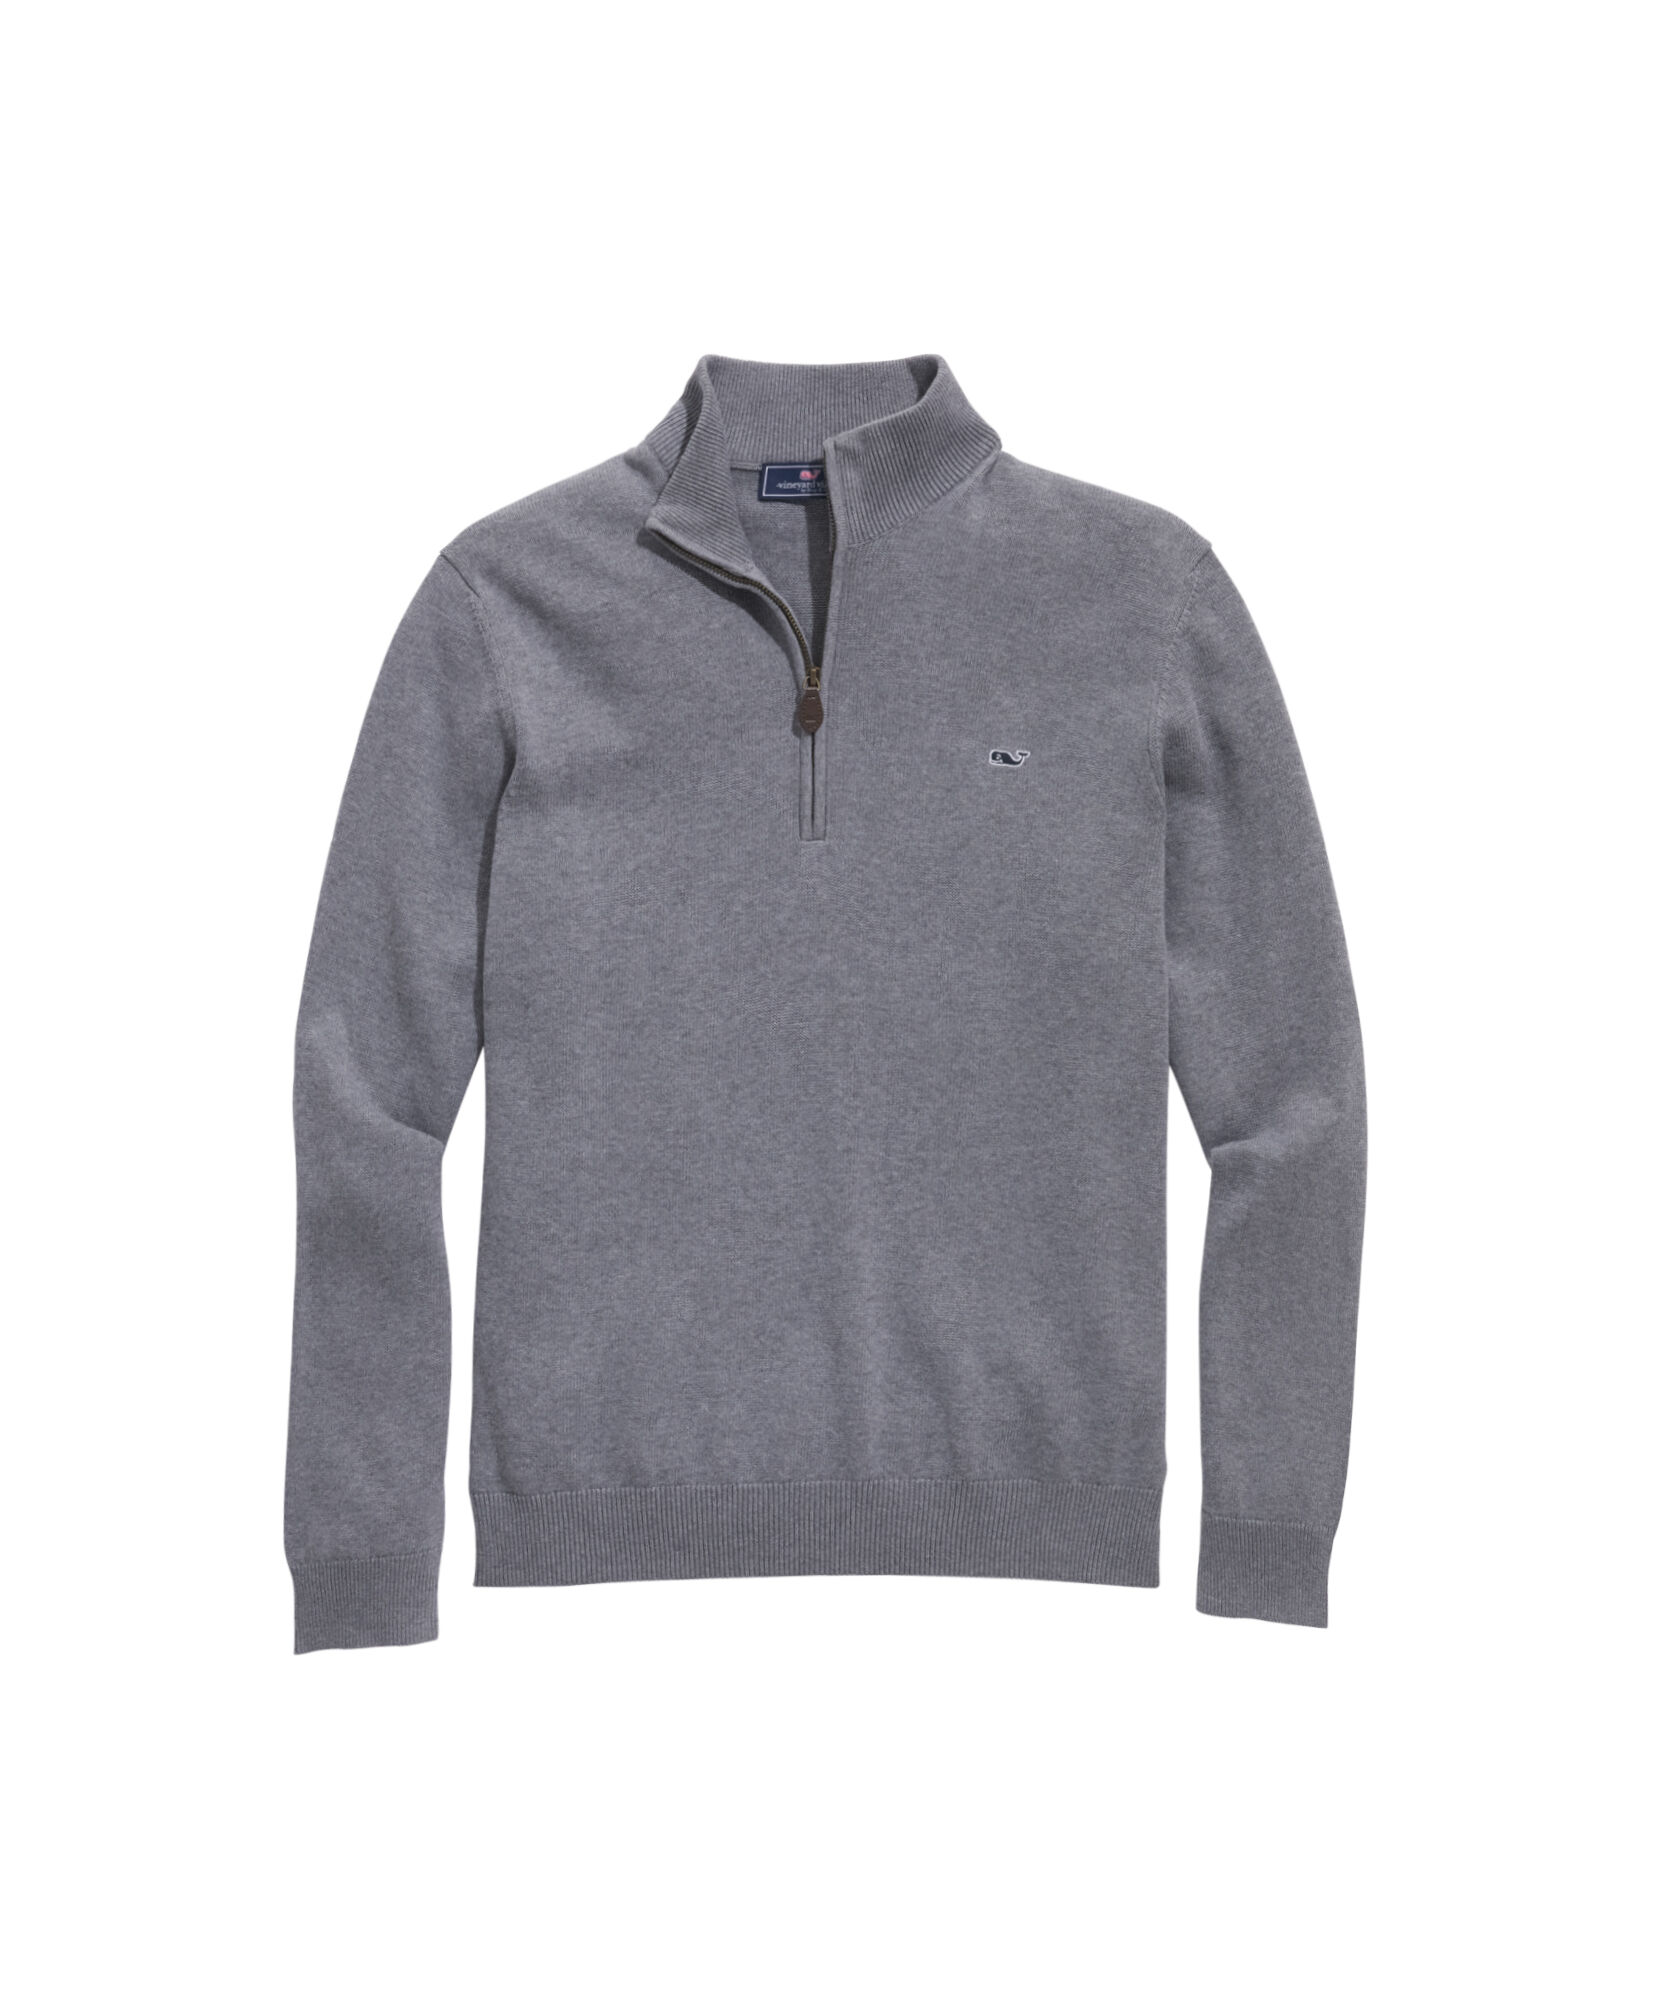 OUTLET Boys' Quarter-Zip Sweater